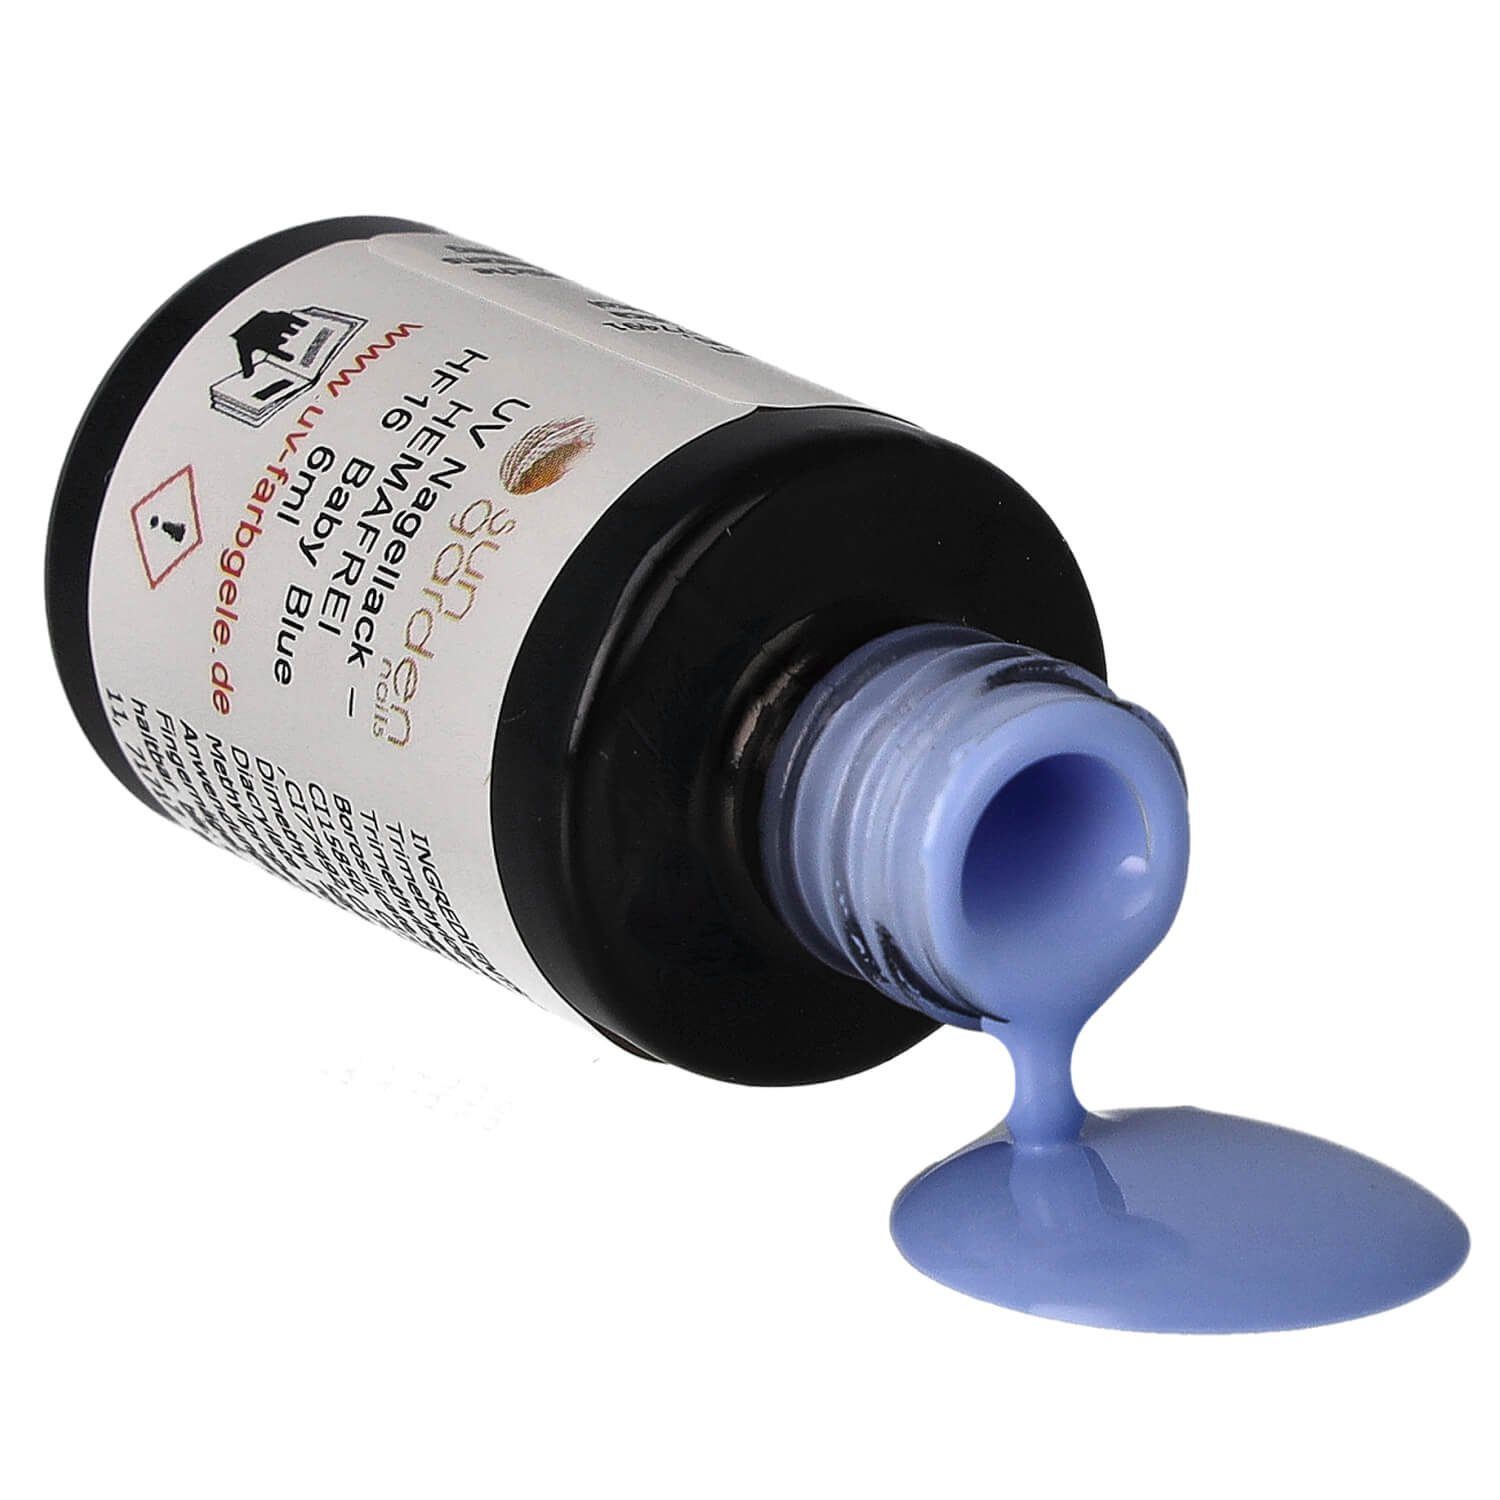 UV Garden Blue Nails - 6ml Nagellack – Baby Sun HF16 HEMAFREI Nagellack